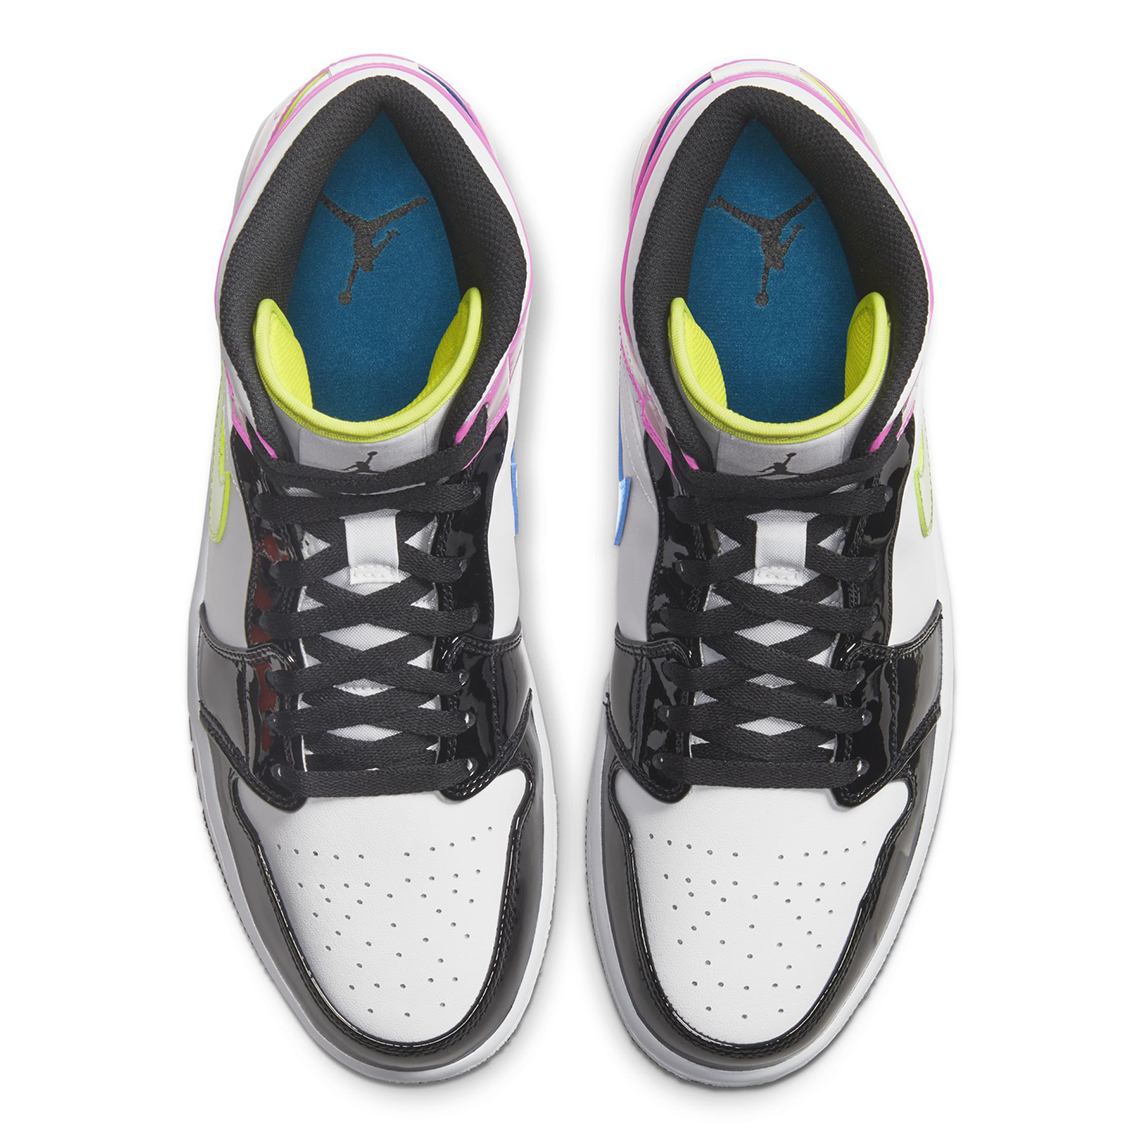 Air Jordan 1 Mid Receives Vibrant Patent Leather Colorway: Photos